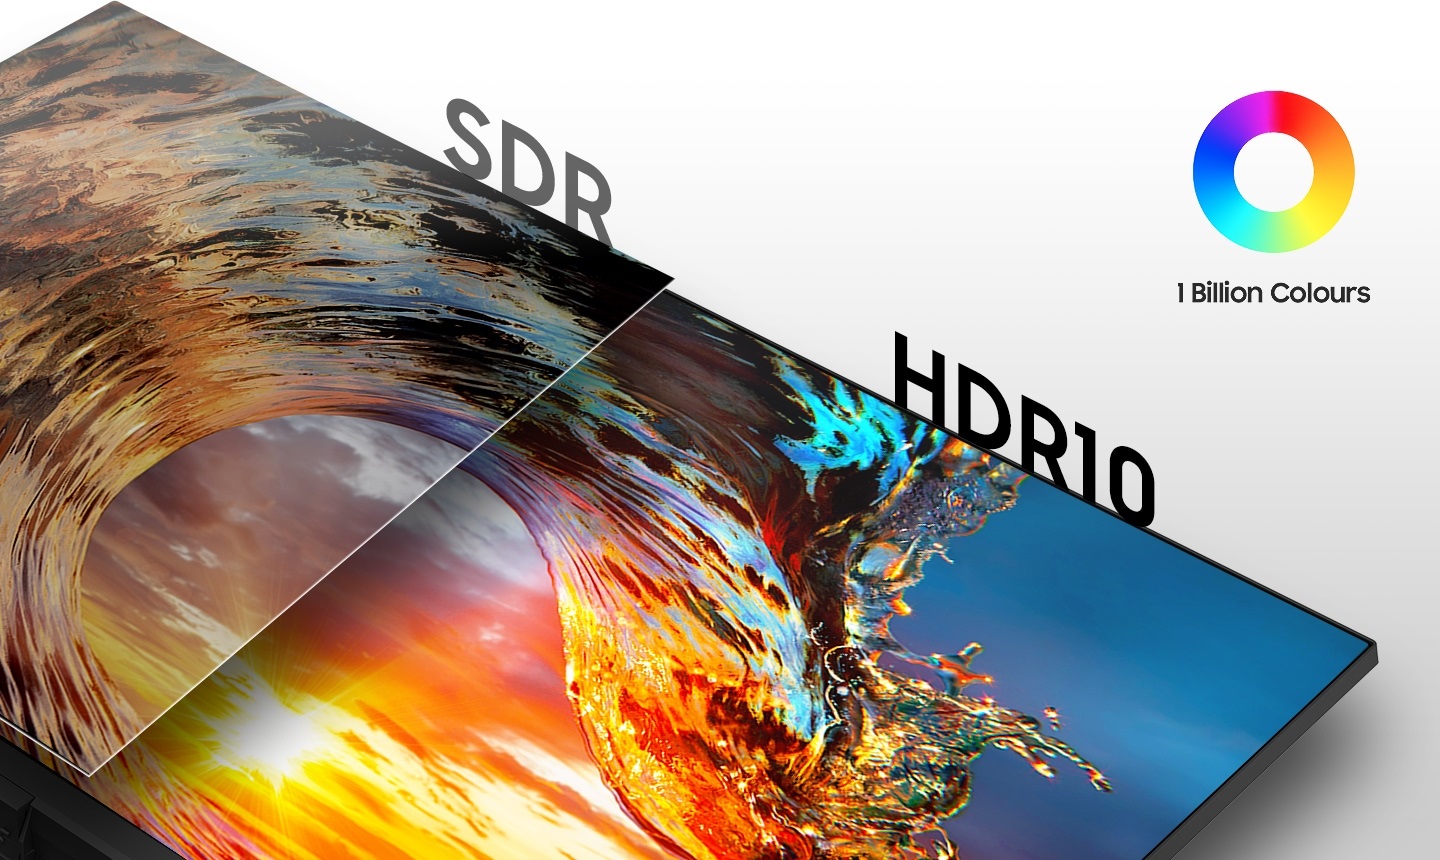 HDR10 vs SDR simulated comparison